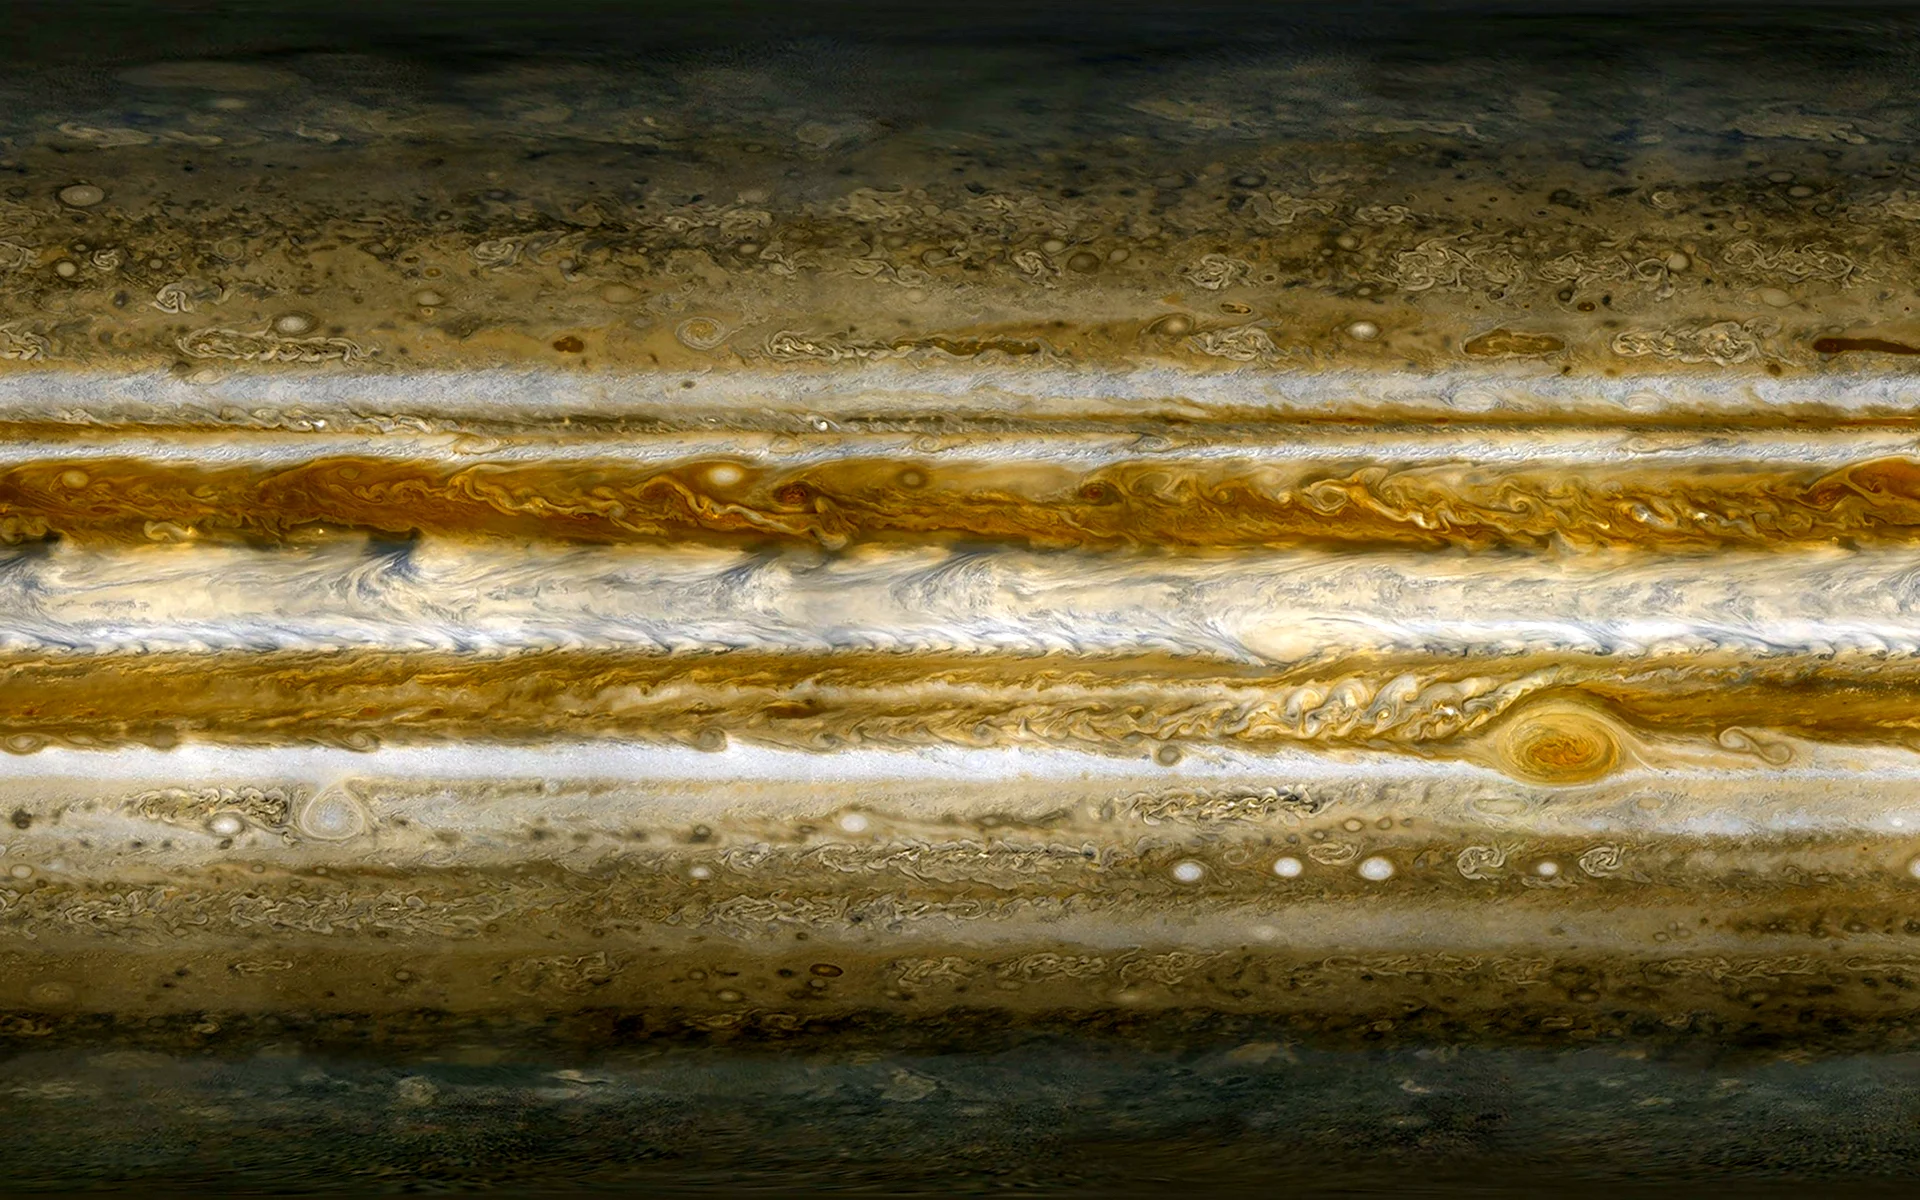 Cassini Юпитера 2000